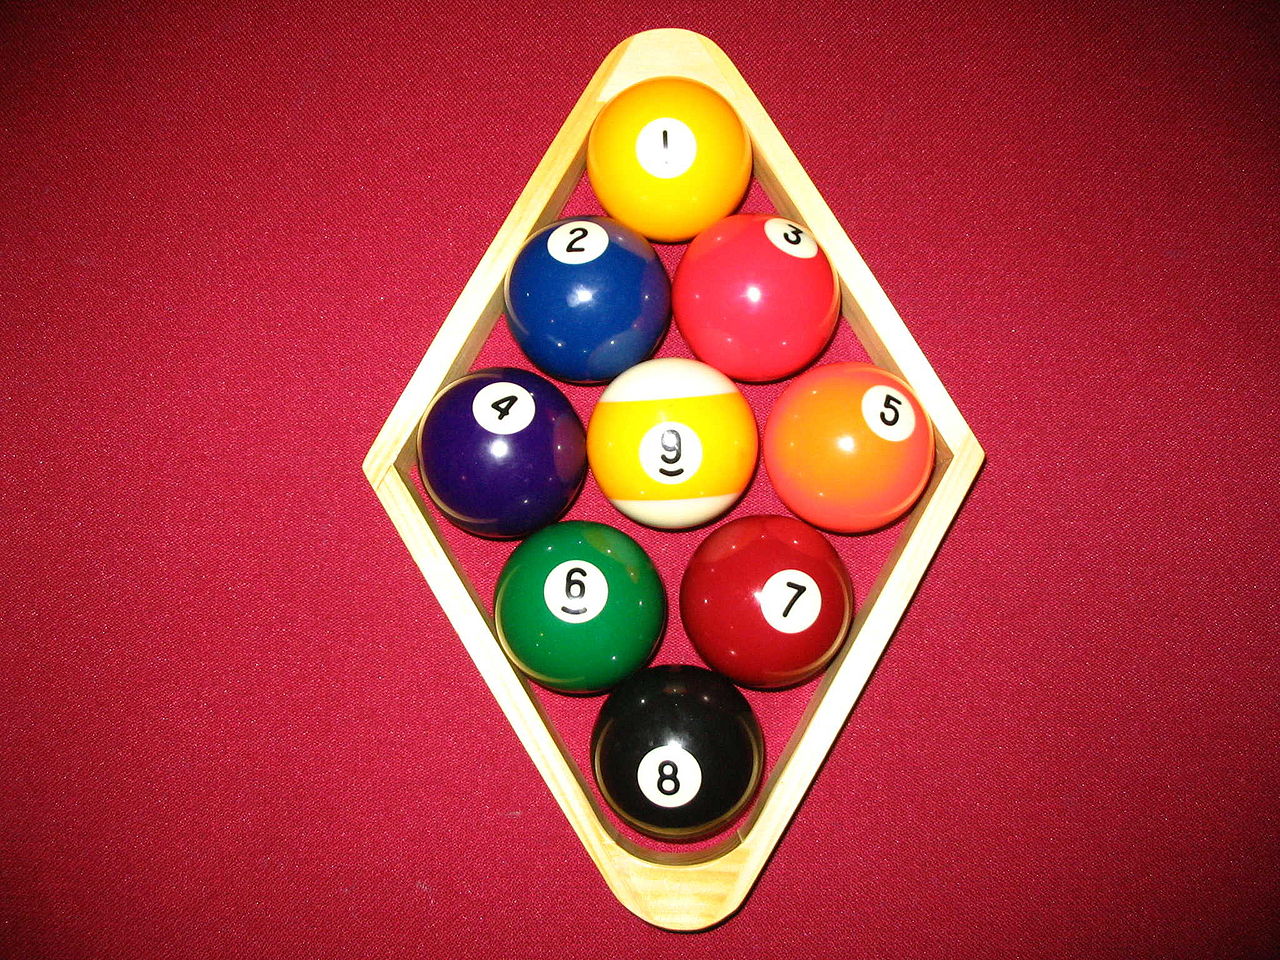 9 Ball Pool – na czym polega ta odmiana bilarda?